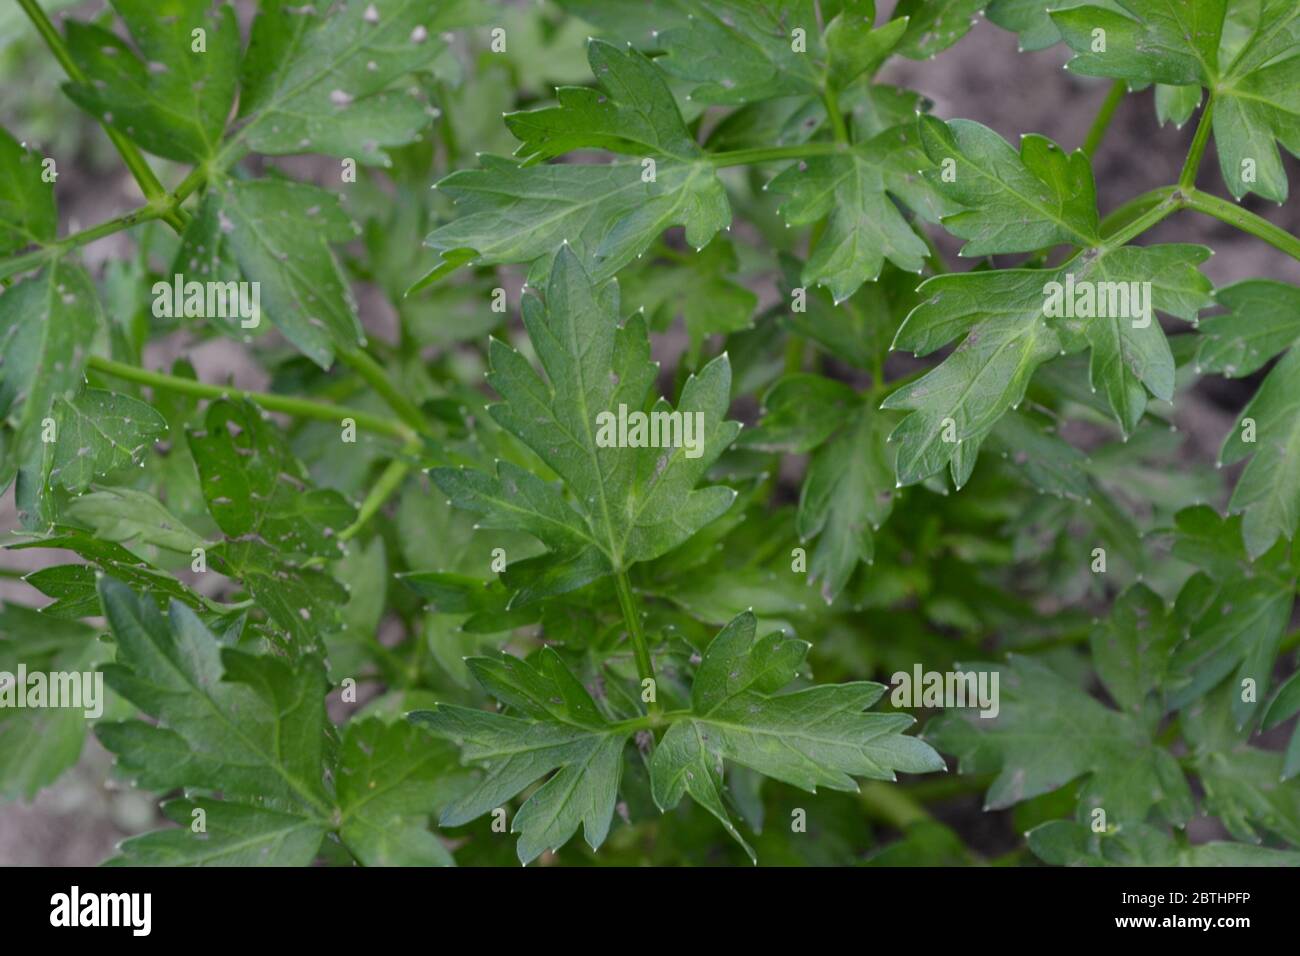 Popular cooking seasoning. Gardening. Parsley. Petroselinum crispum Stock Photo